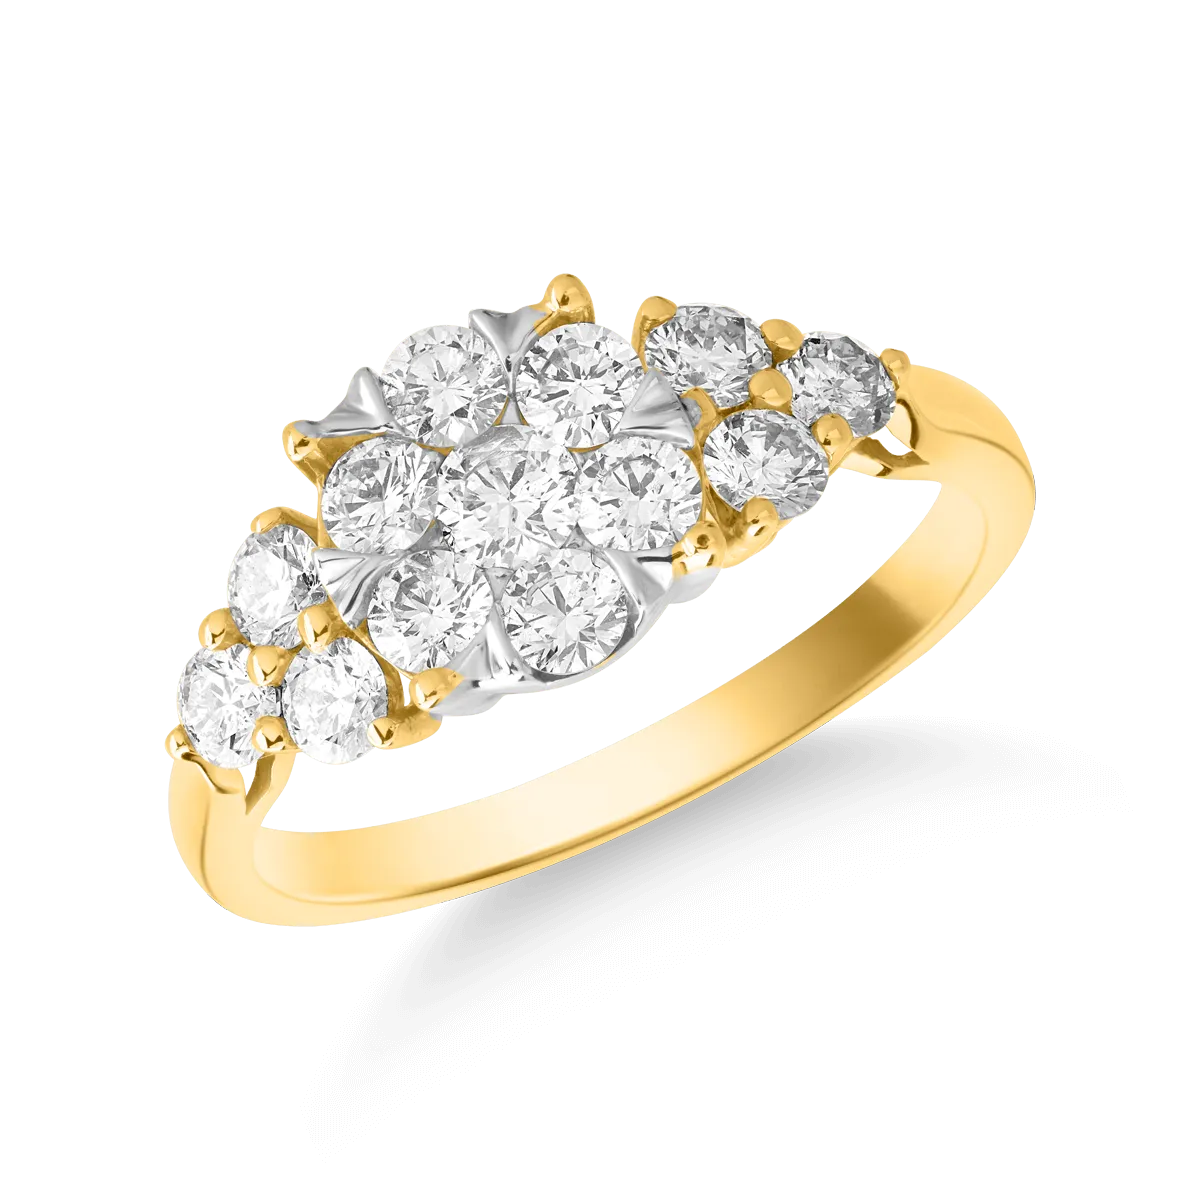 Inel din aur galben de 18K cu diamante de 1ct